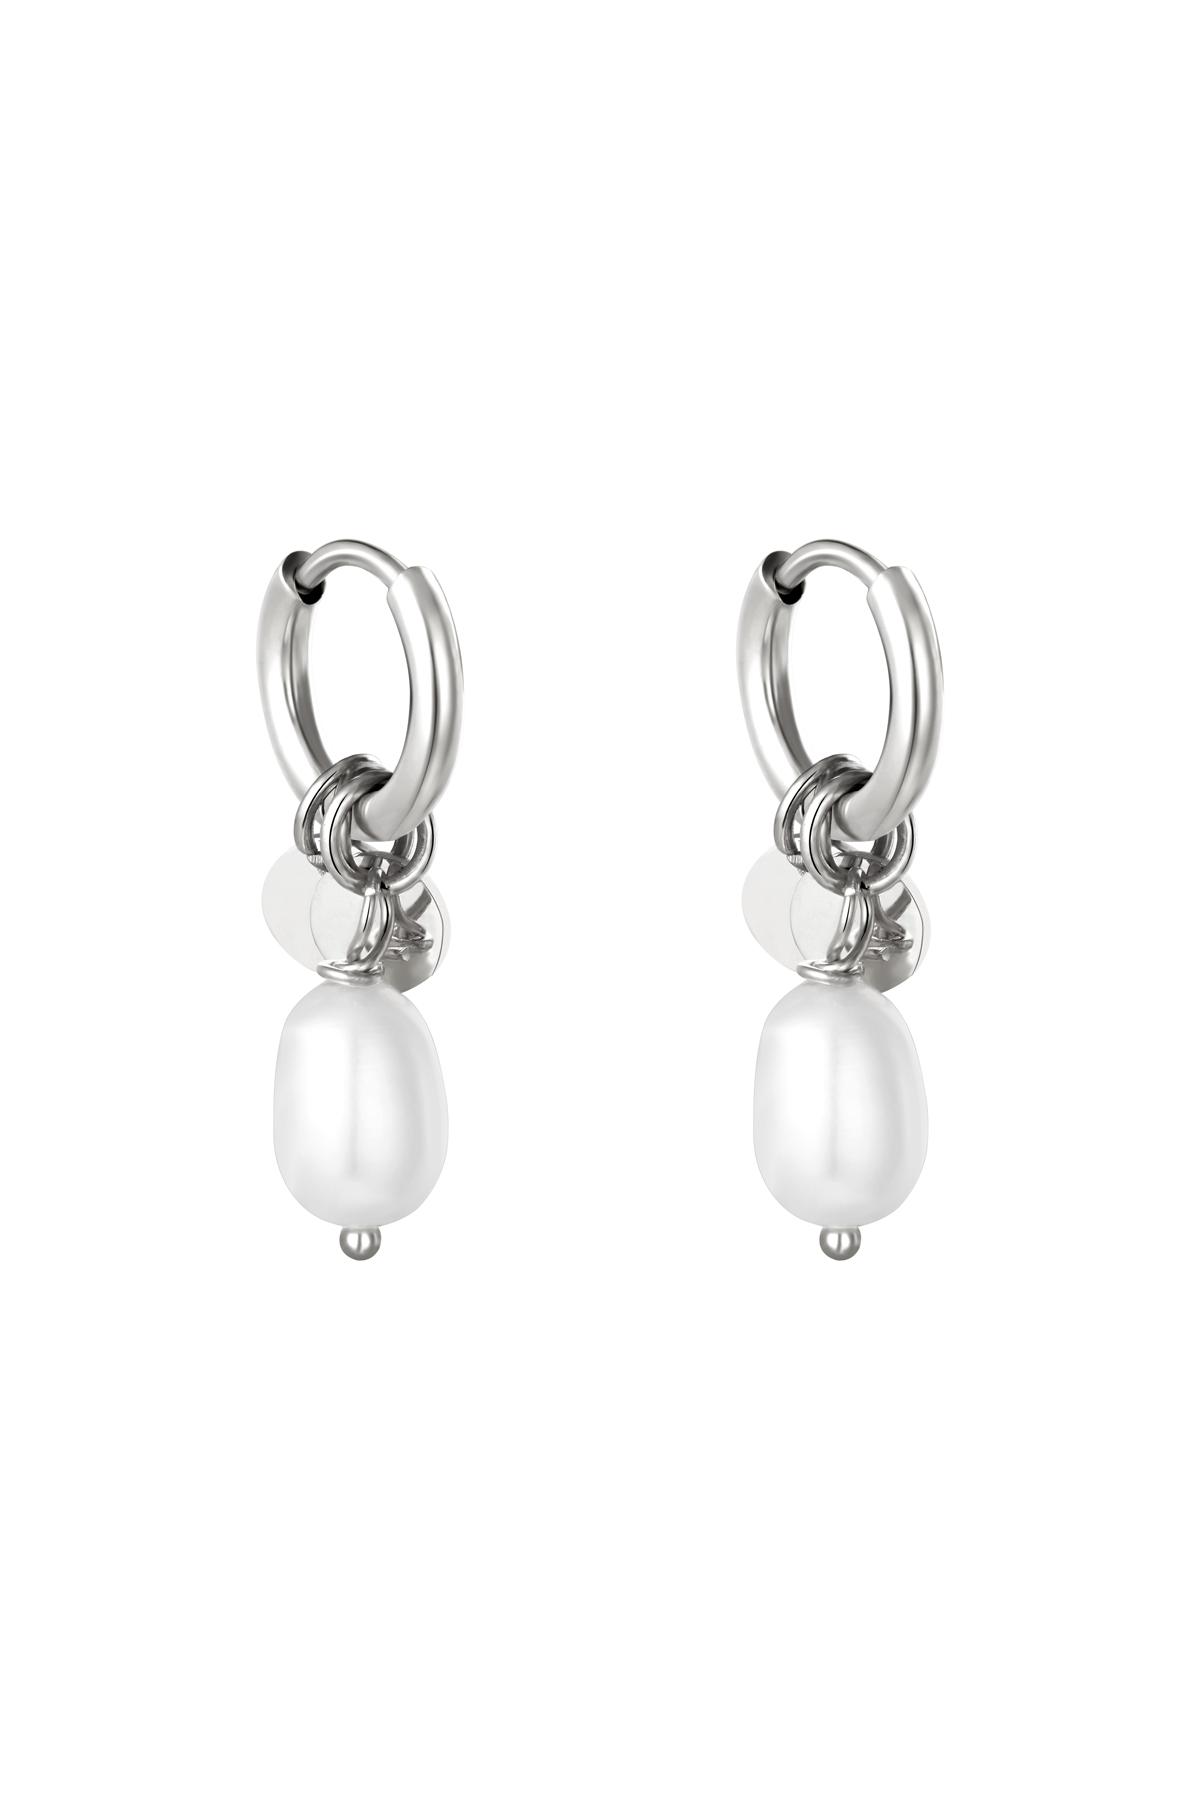 Earrings Pearl Drops Silver Stainless Steel h5 